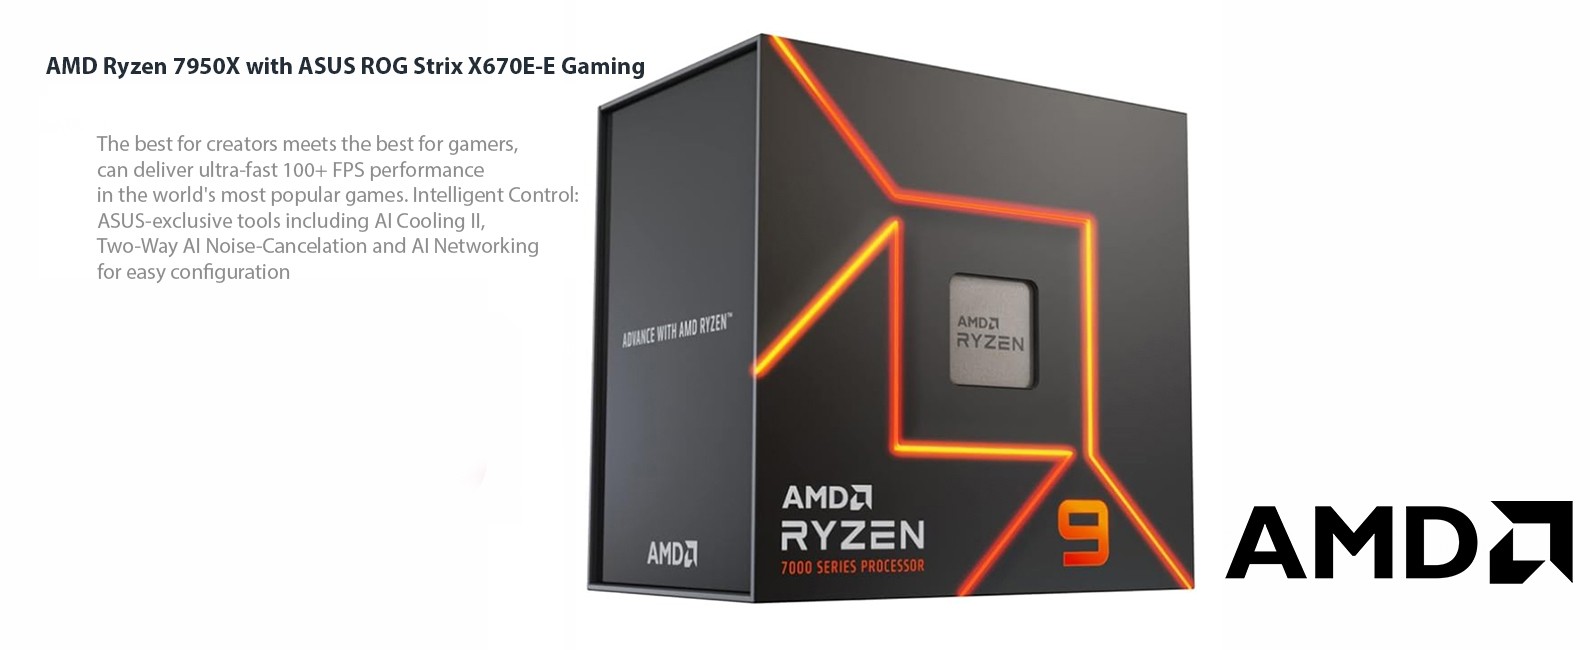 AMD Ryzen 7950X with ASUS ROG Strix X670E-E Gaming